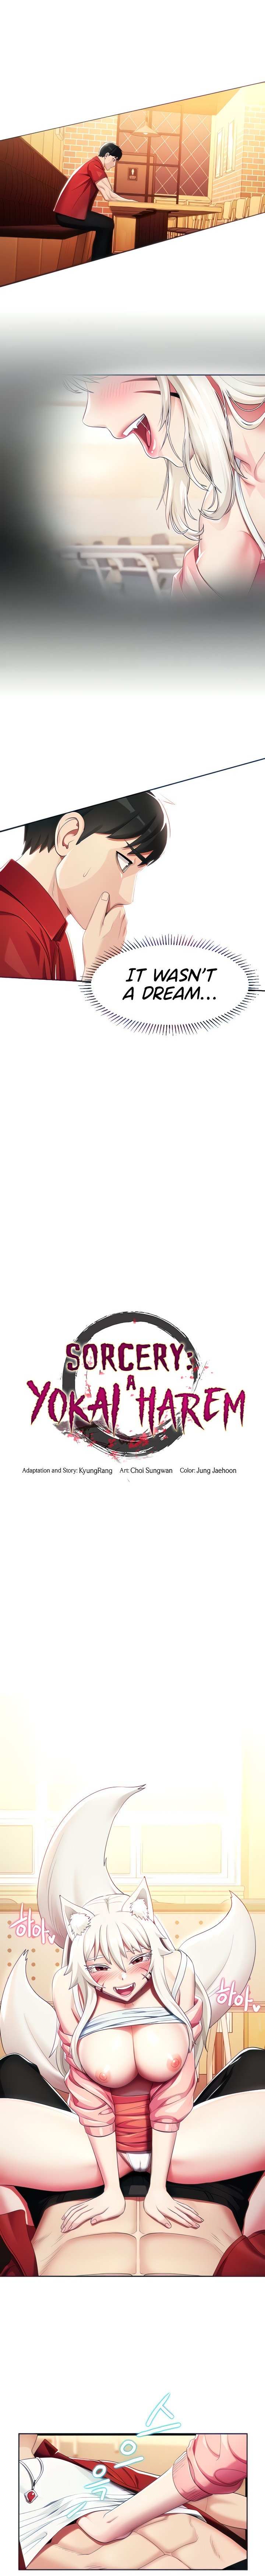 Sorcery Tales: Yokai Harem - Page 2